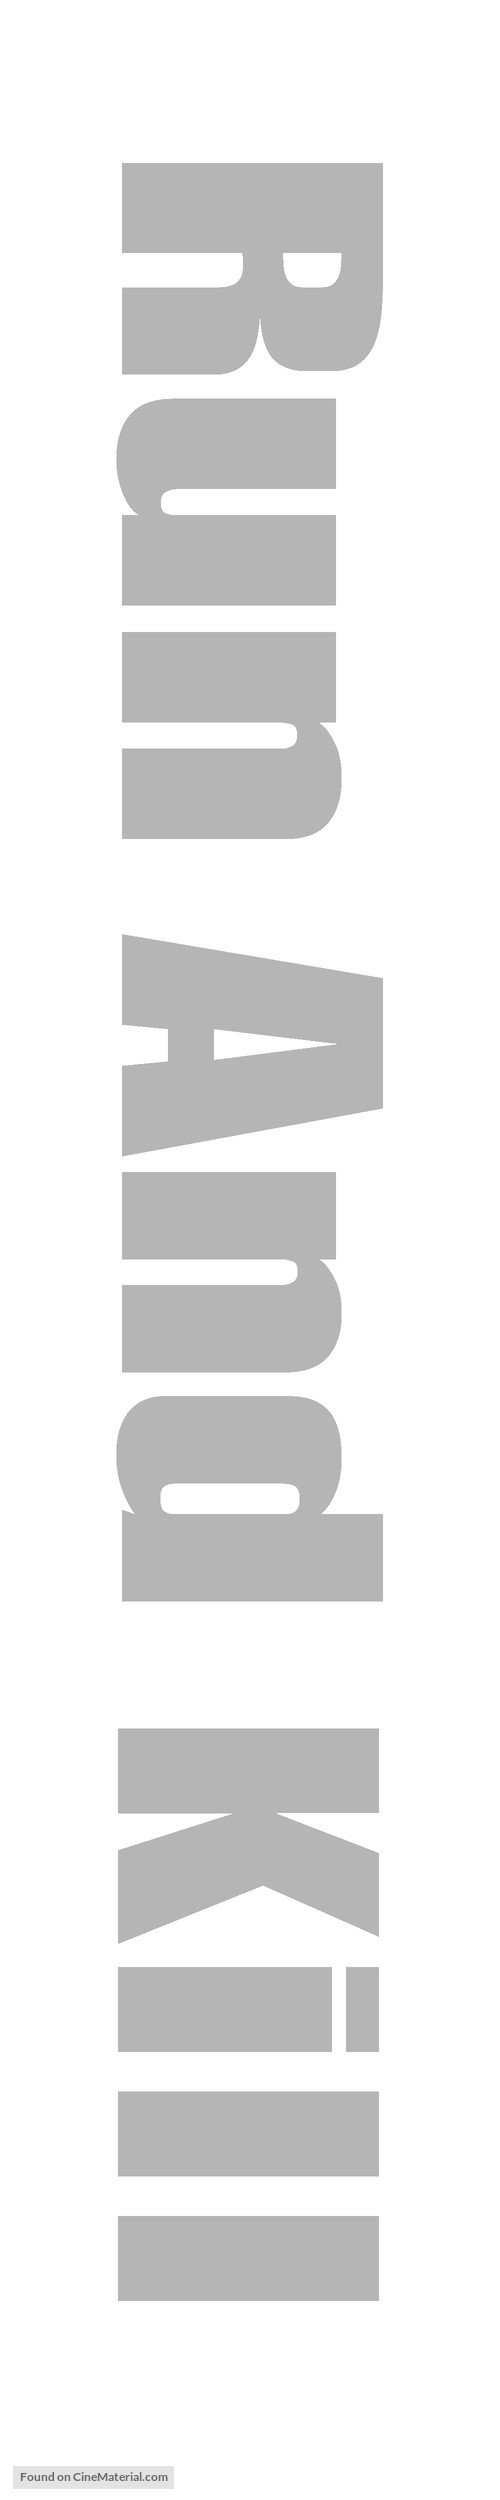 Woo sue - Logo